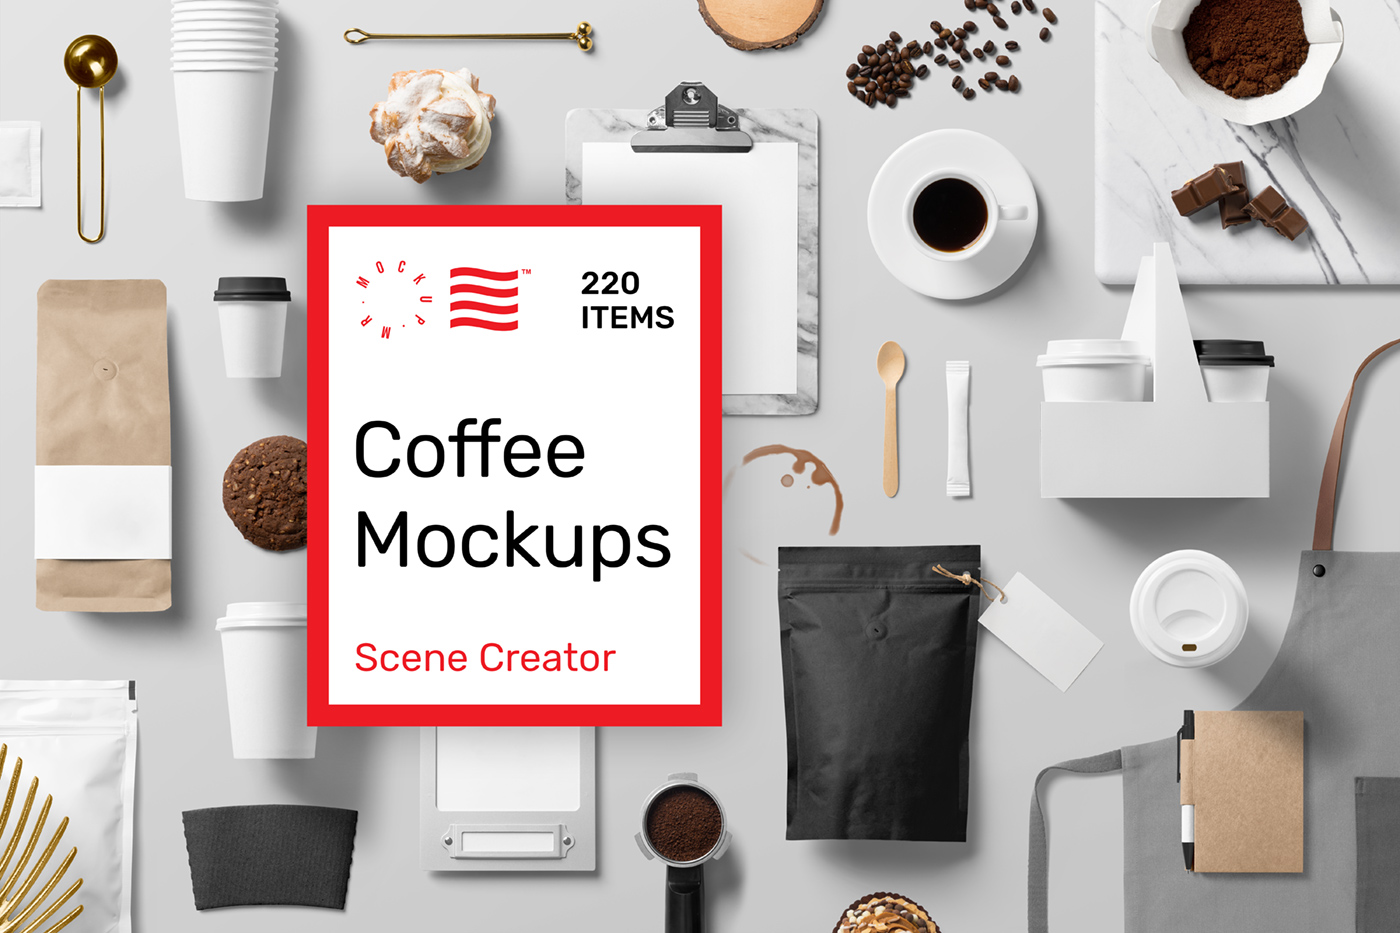 https://mrmockup.com/wp-content/uploads/2022/01/Coffee-Mockups-W-00.jpg